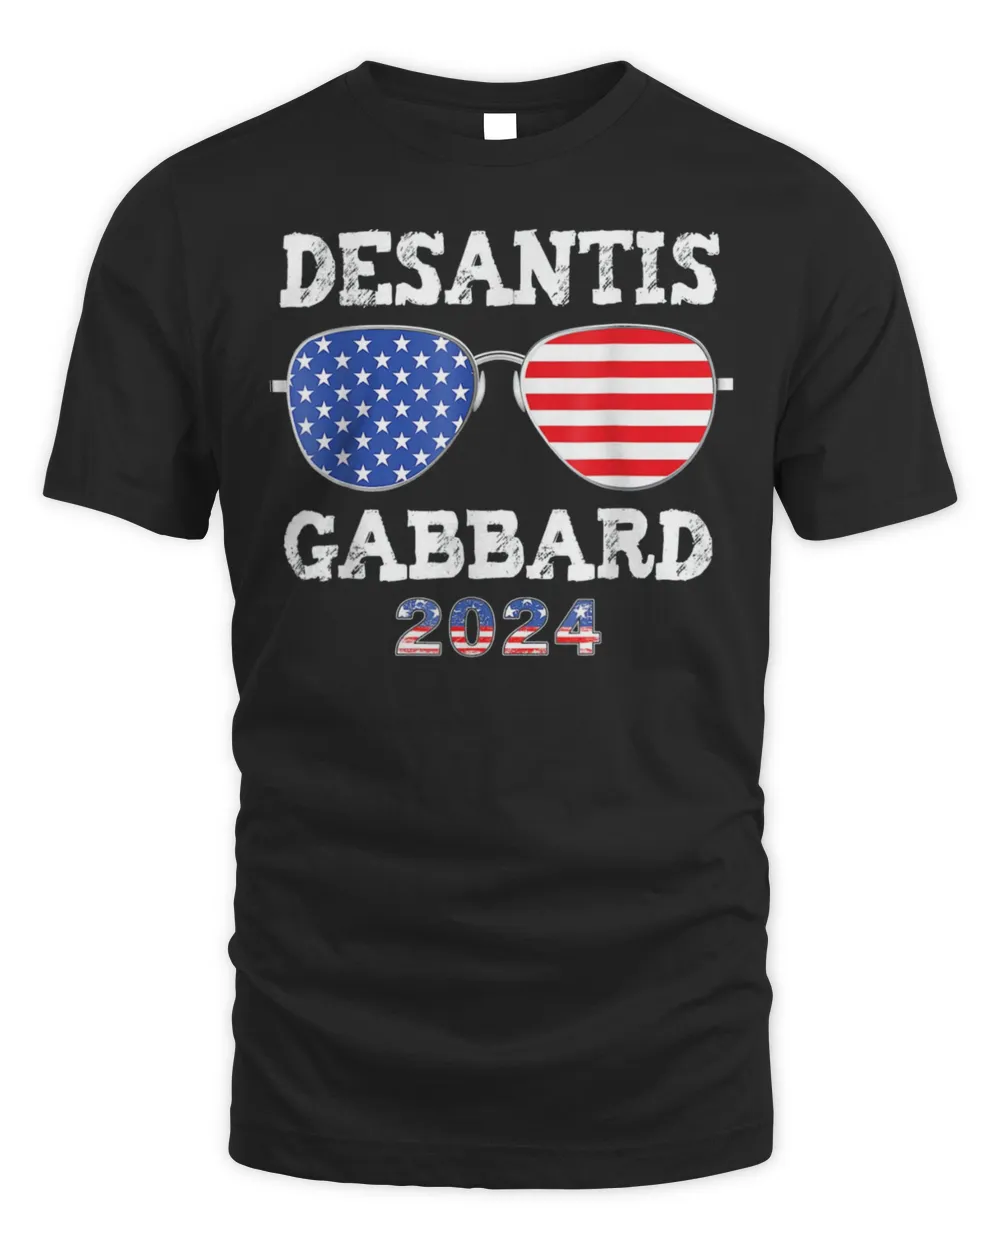 DeSantis Gabbard 2024 President Election Republican Ticket T-Shirt